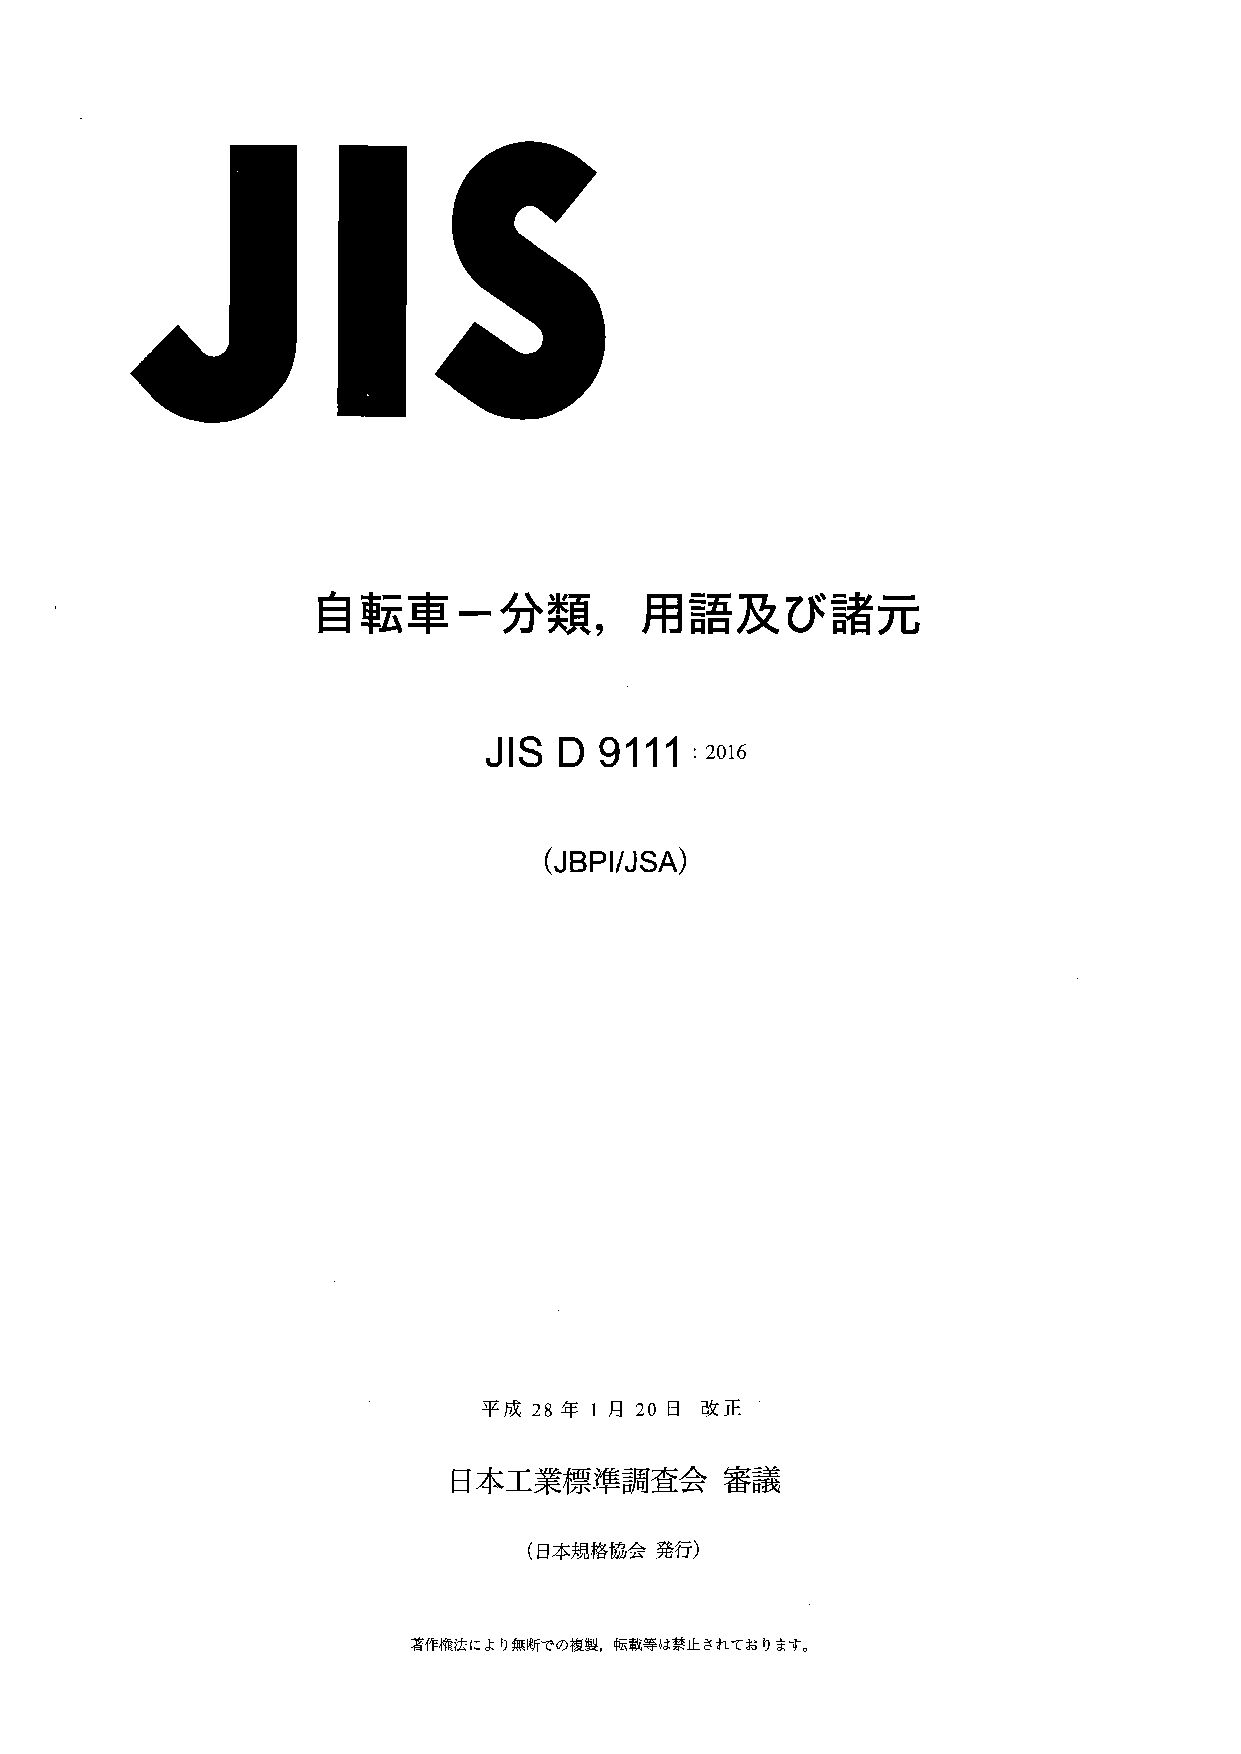 JIS D 9111:2016